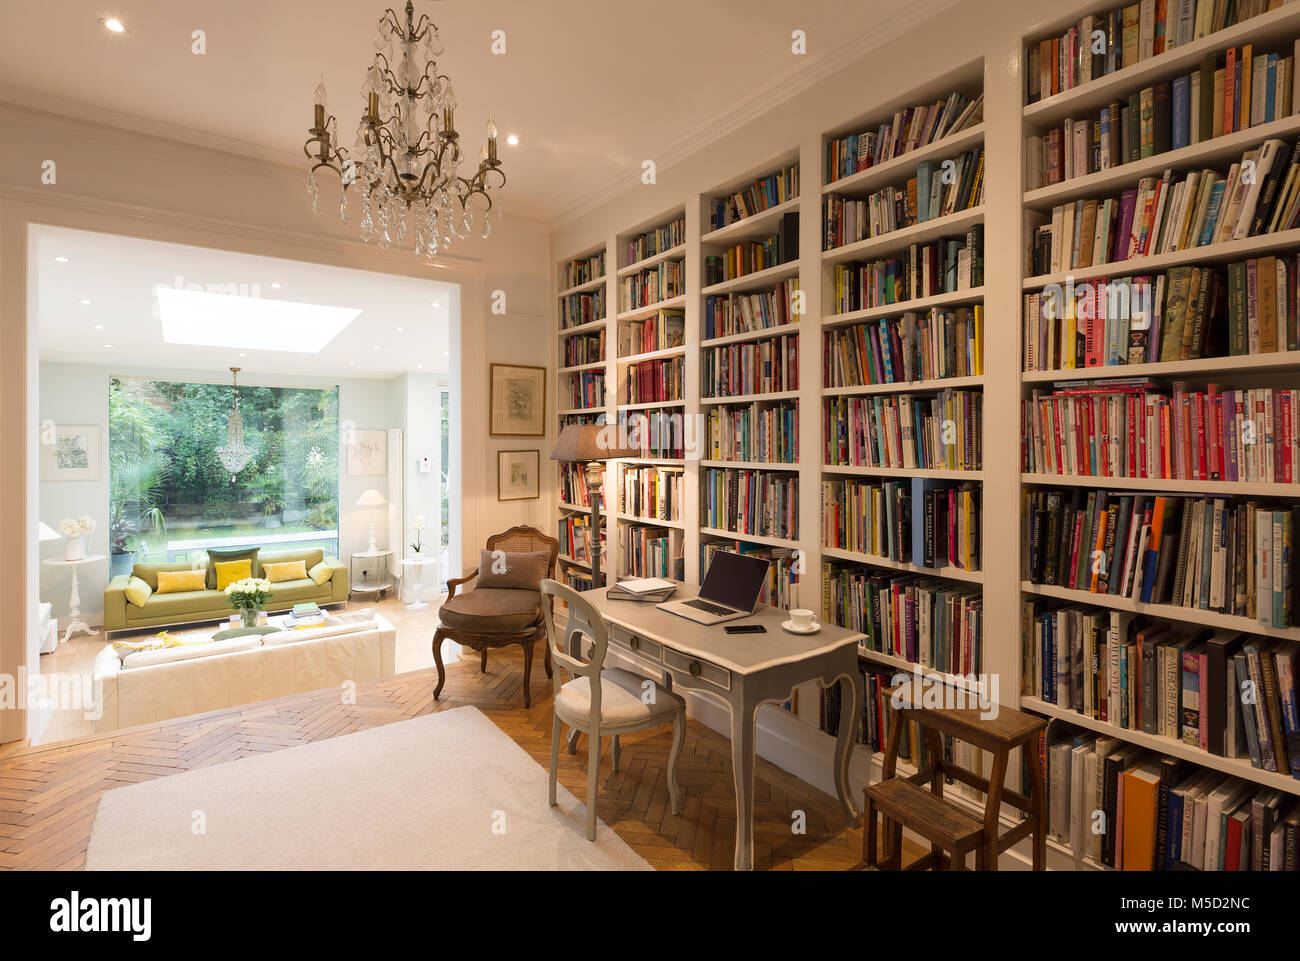 Books on bookshelves in luxury home showcase interior library Stock Photo